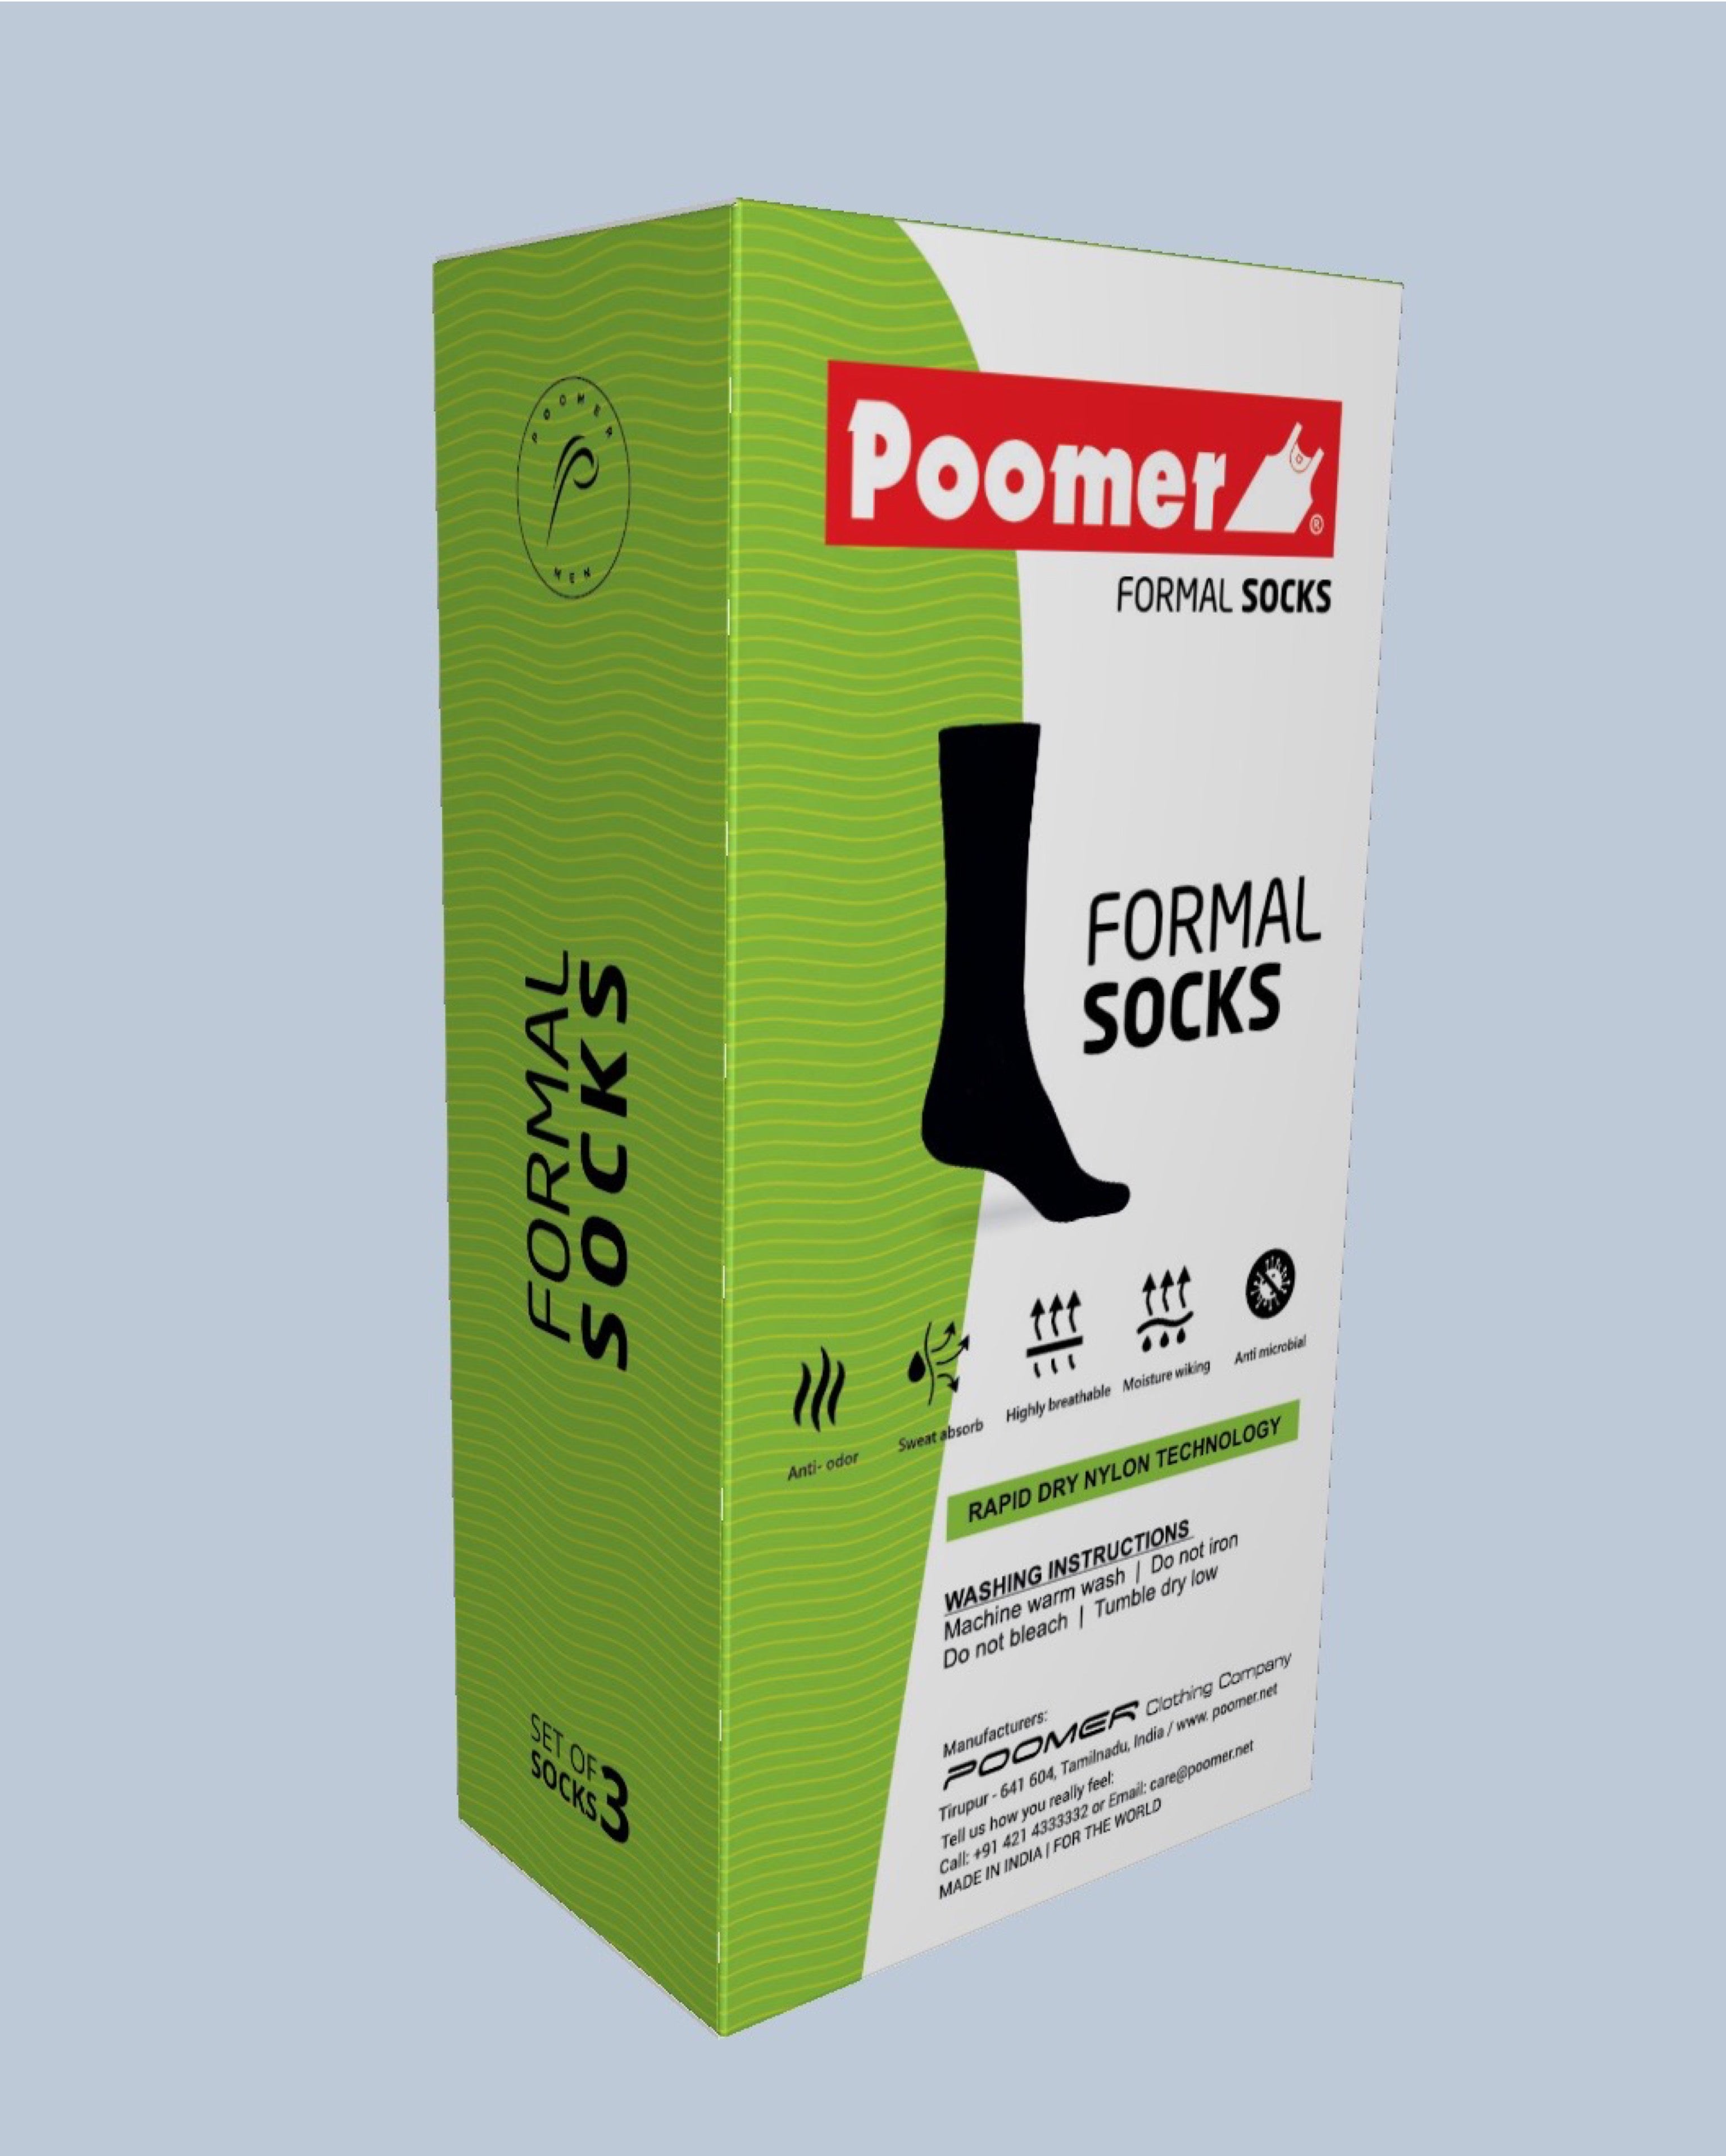 poomex #poomex #innerwear #poomex #poomer #poomex #poomex #men